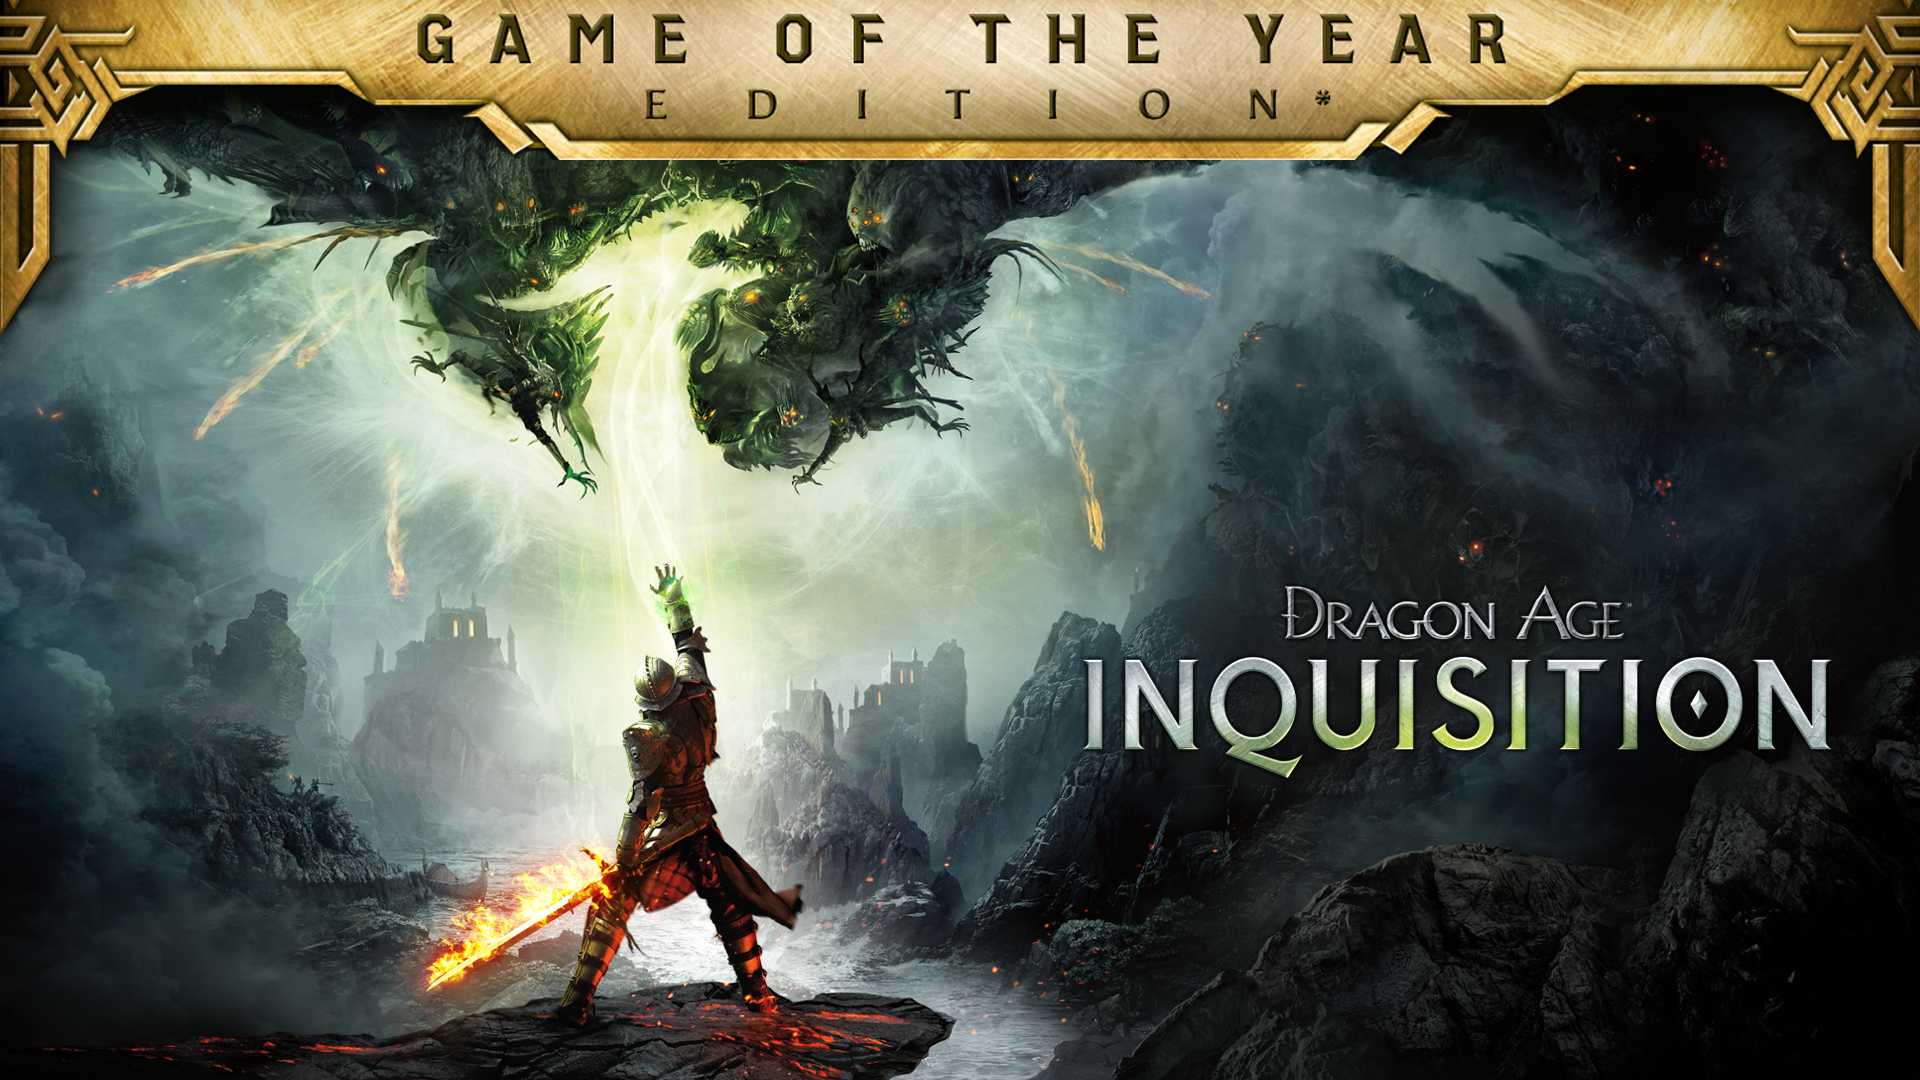 Dragon Age™: Инквизиция - издание «Игра года» 